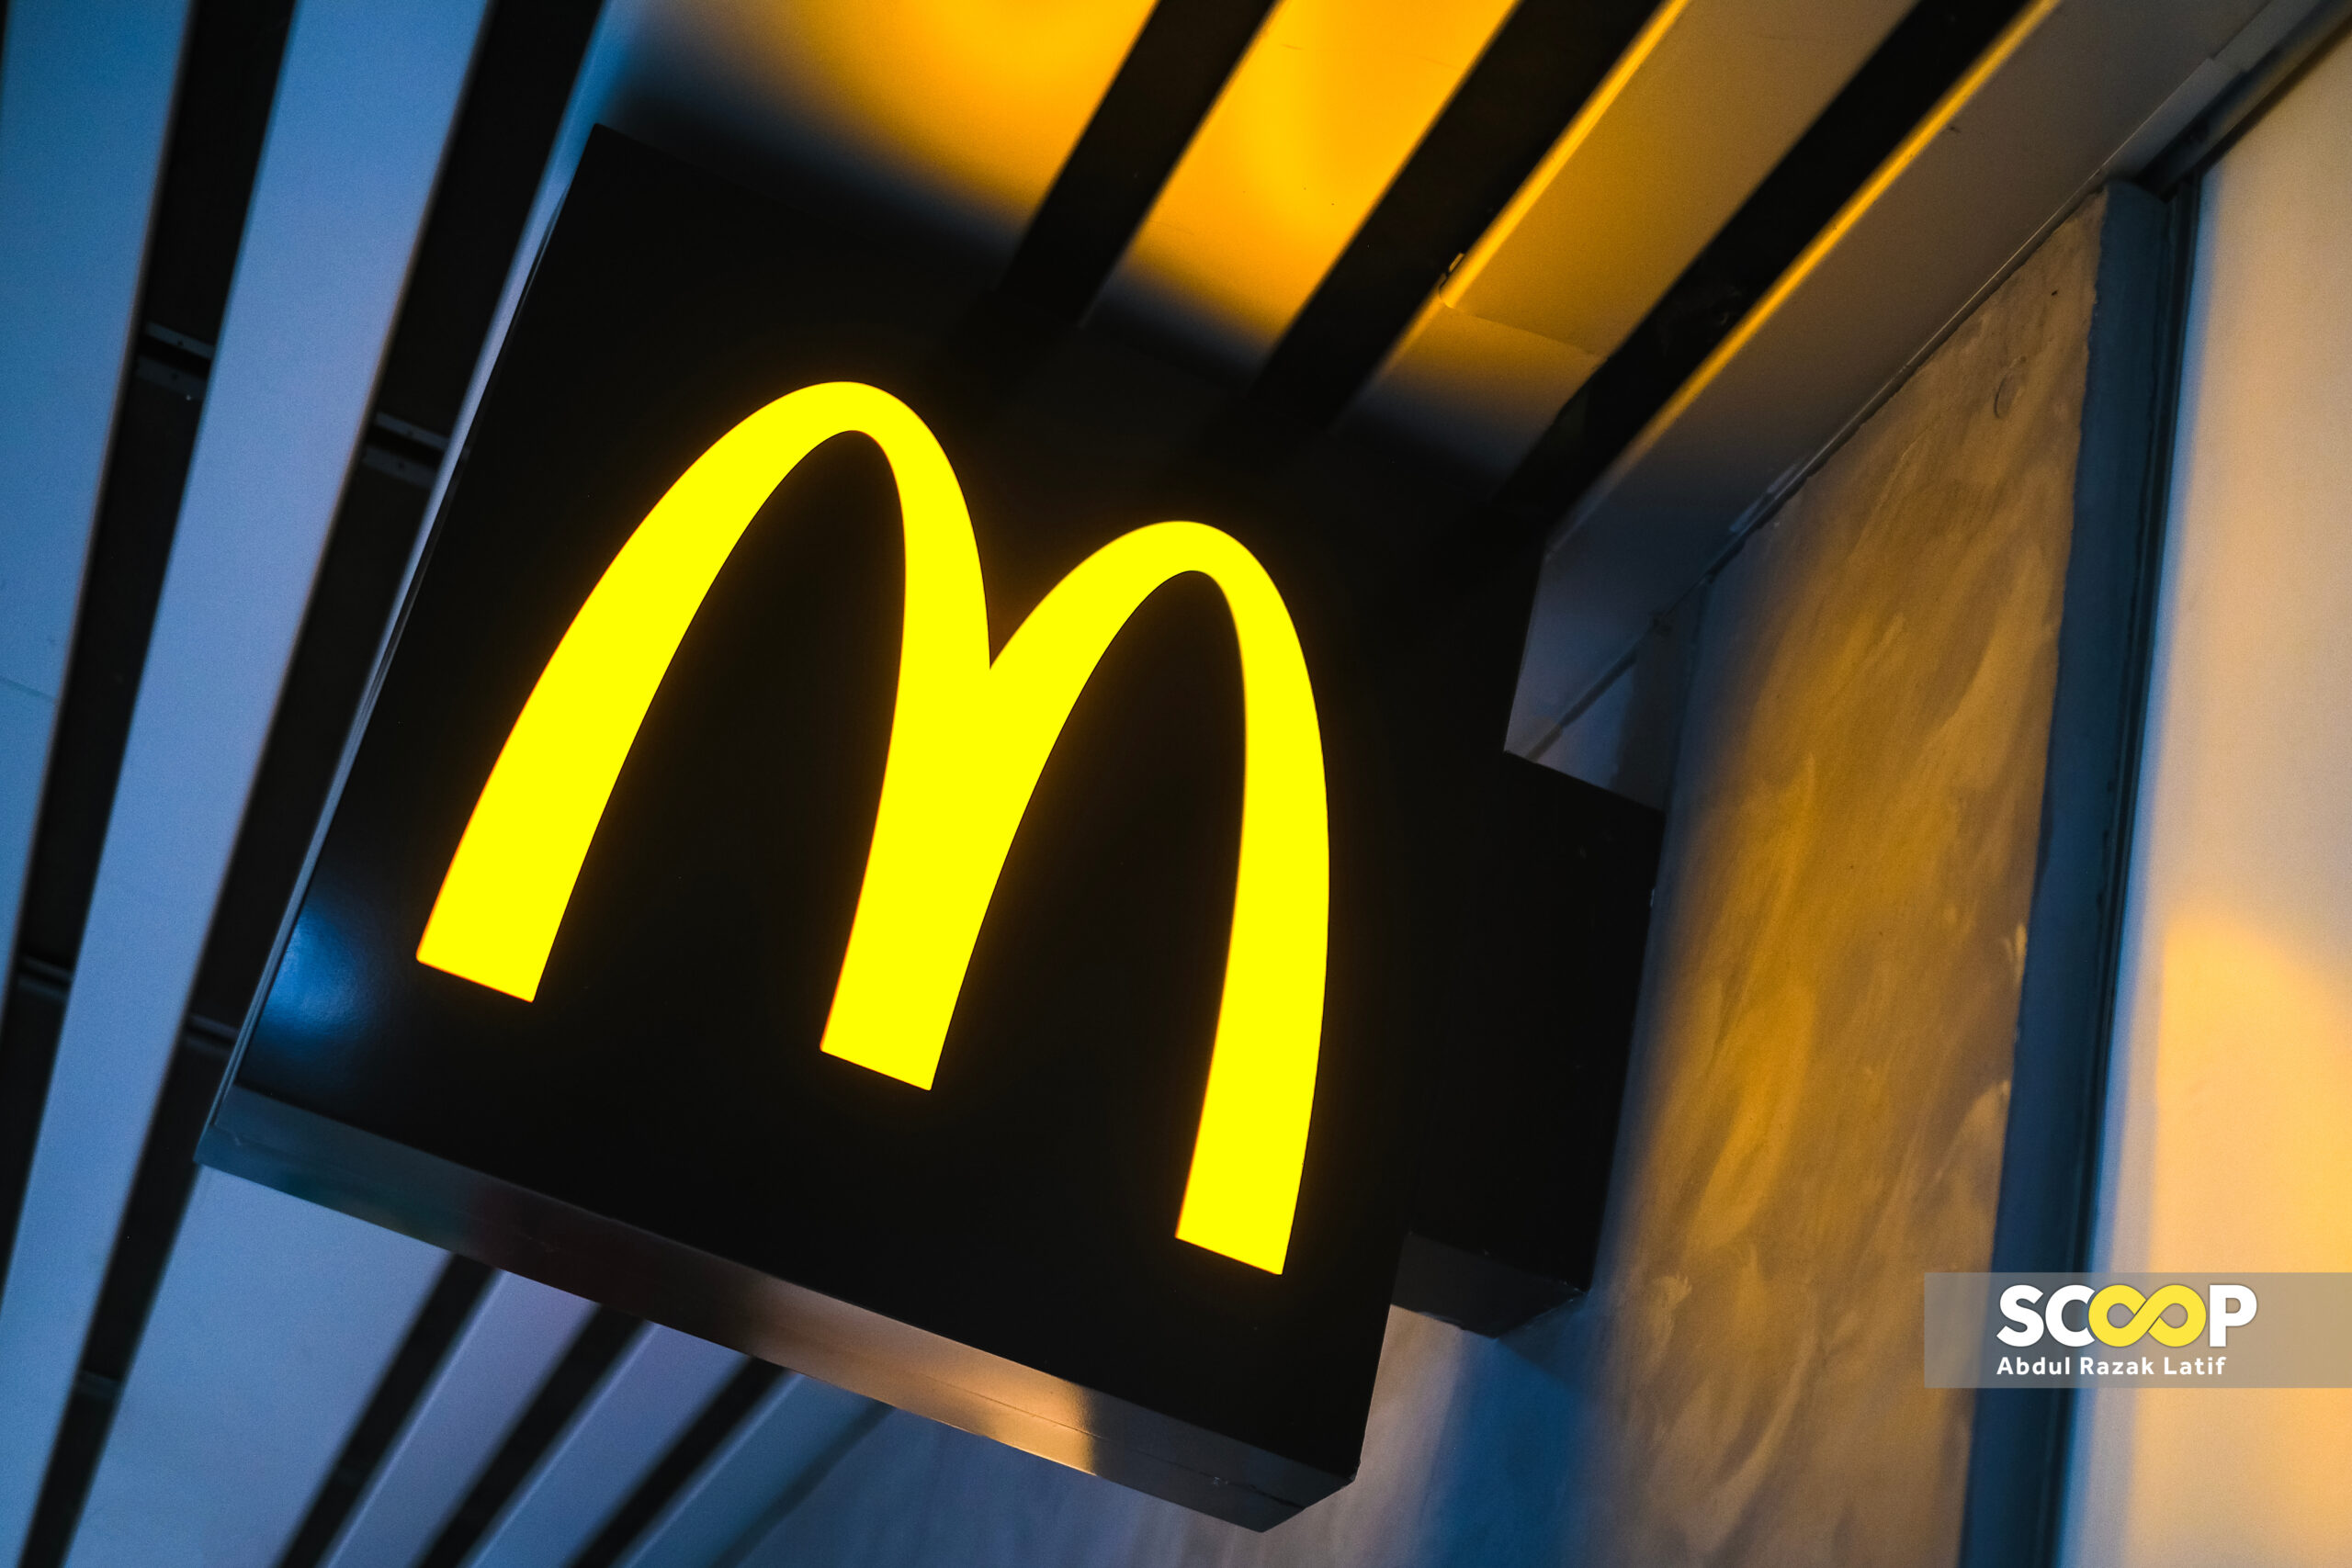 US sales boost McDonald’s Q1 profits despite boycotts hampering other markets